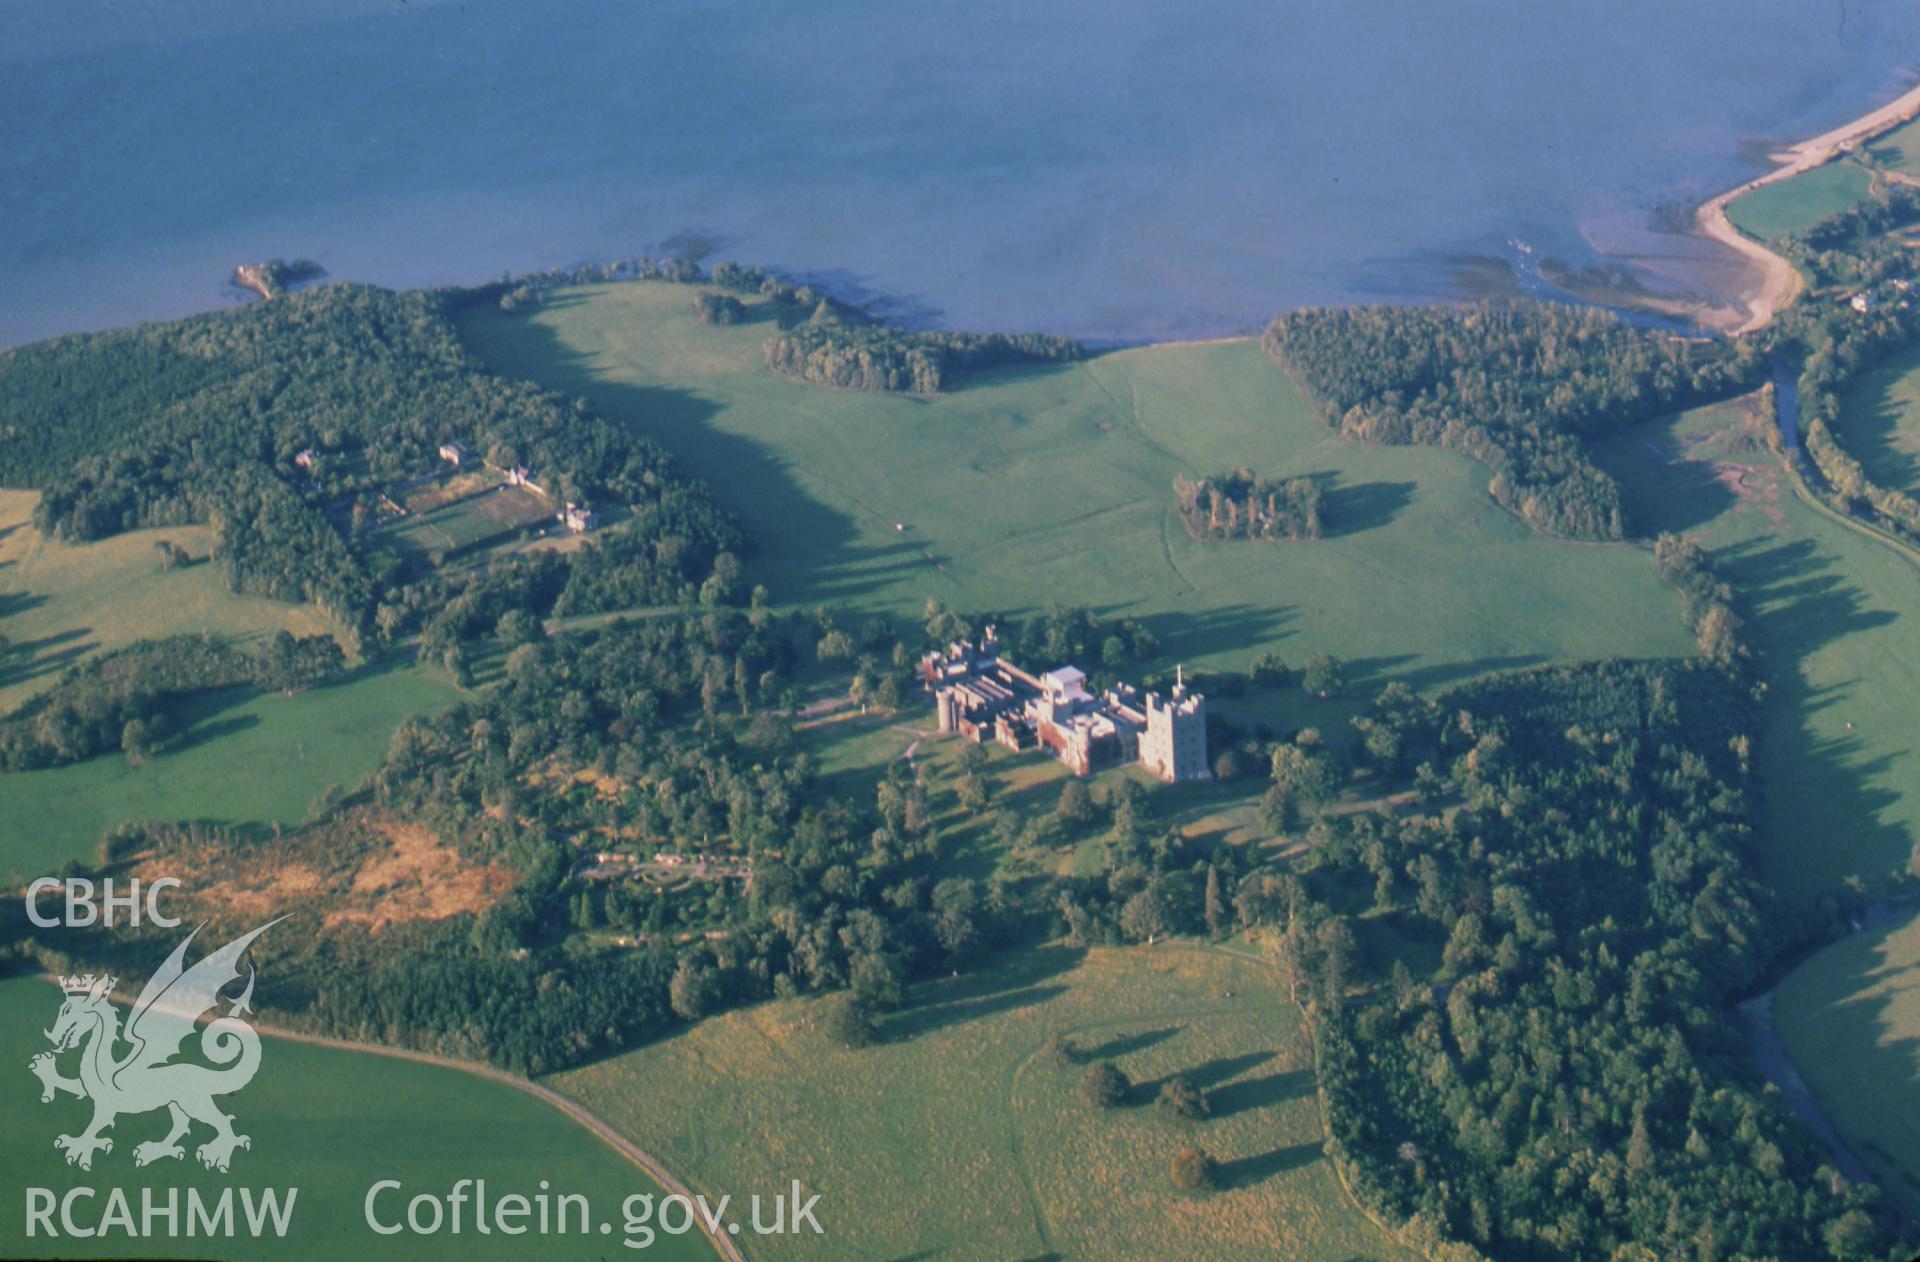 Slide of RCAHMW colour oblique aerial photograph of Penrhyn Castle, Bangor, taken by C.R. Musson, 5/8/1988.